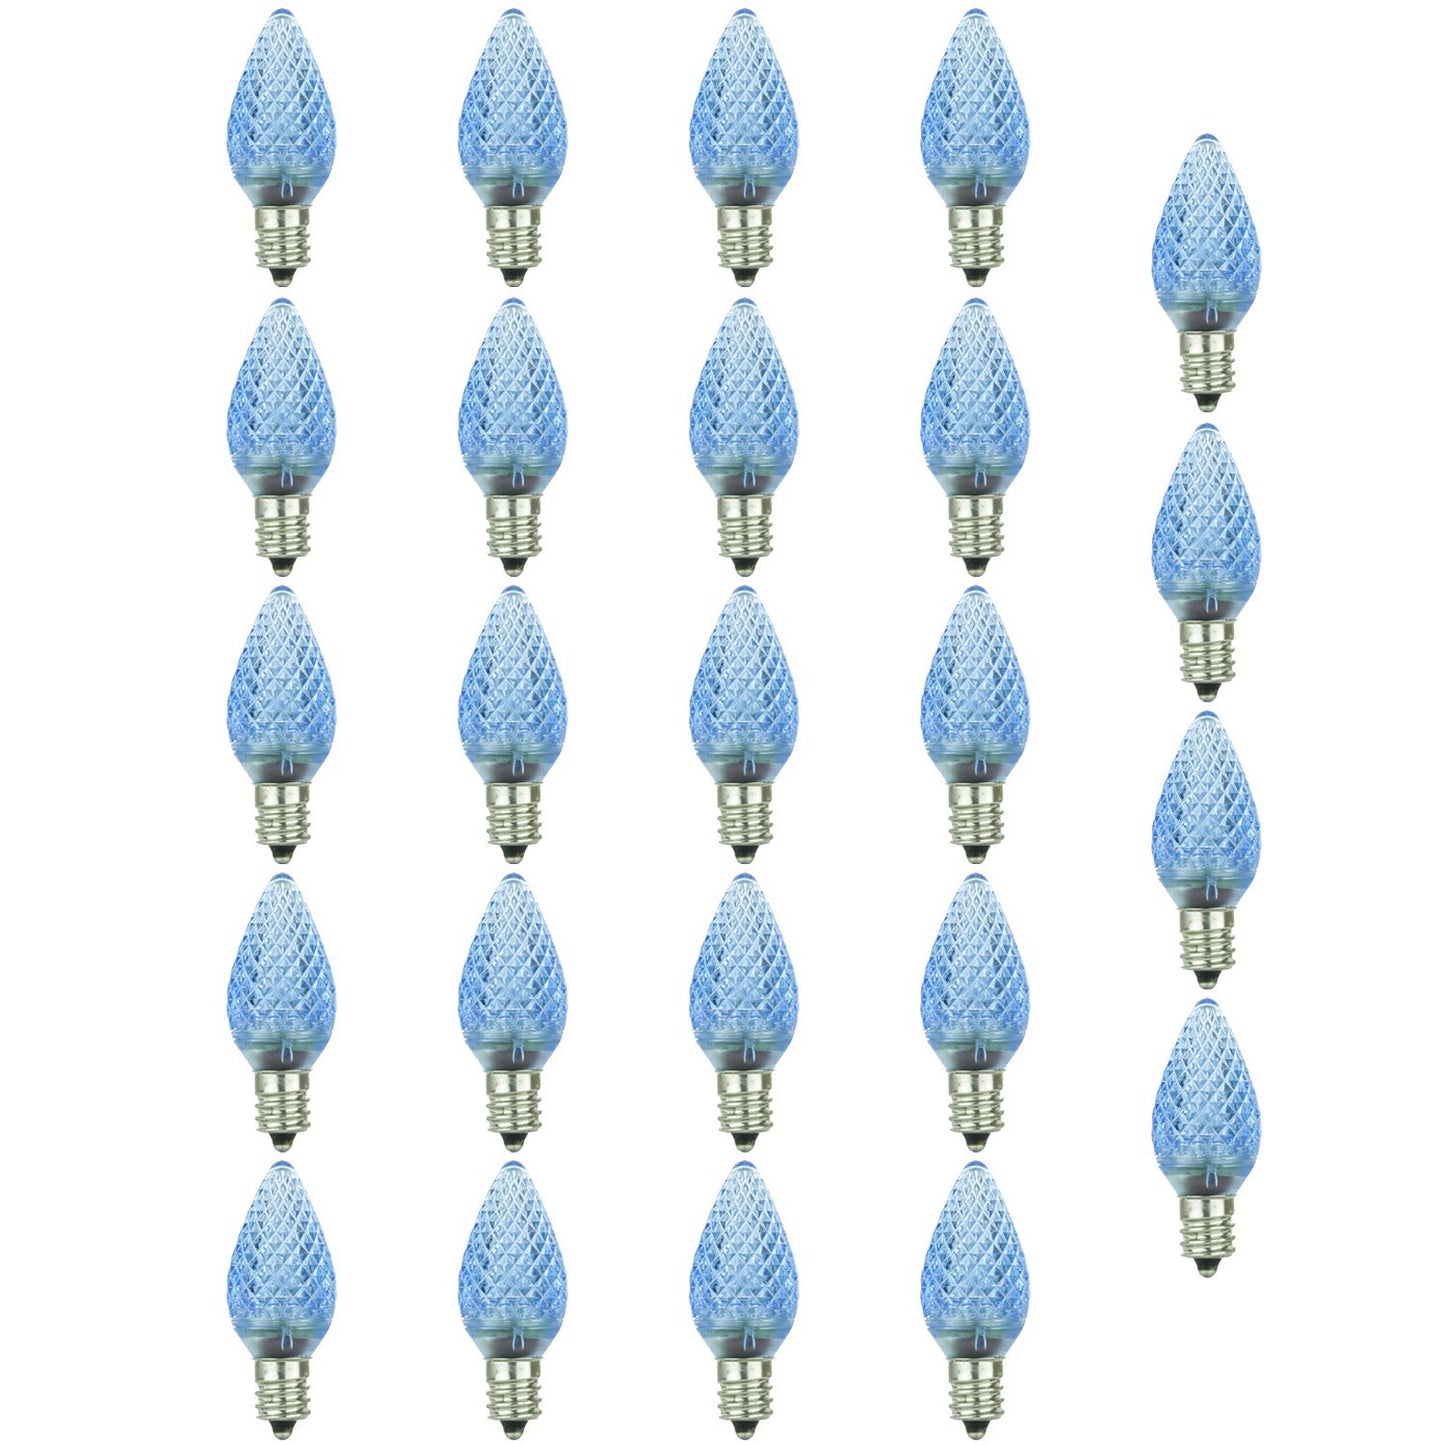 Sunlite LED C9 0.4W Blue Colored Decorative Chandelier Light Bulbs, Intermediate (E17) Base